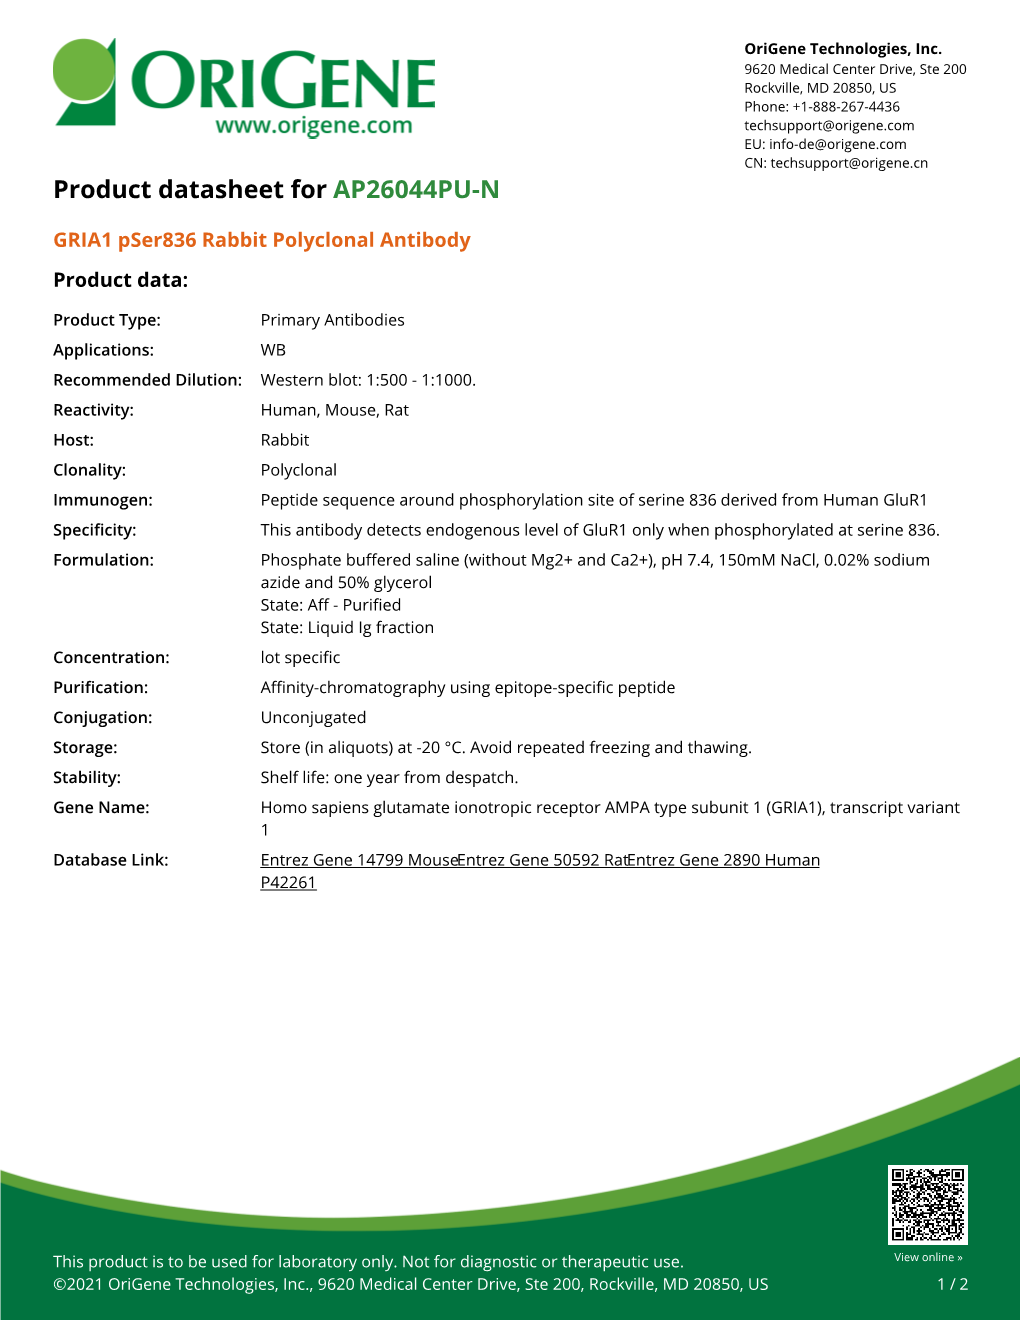 GRIA1 Pser836 Rabbit Polyclonal Antibody – AP26044PU-N | Origene